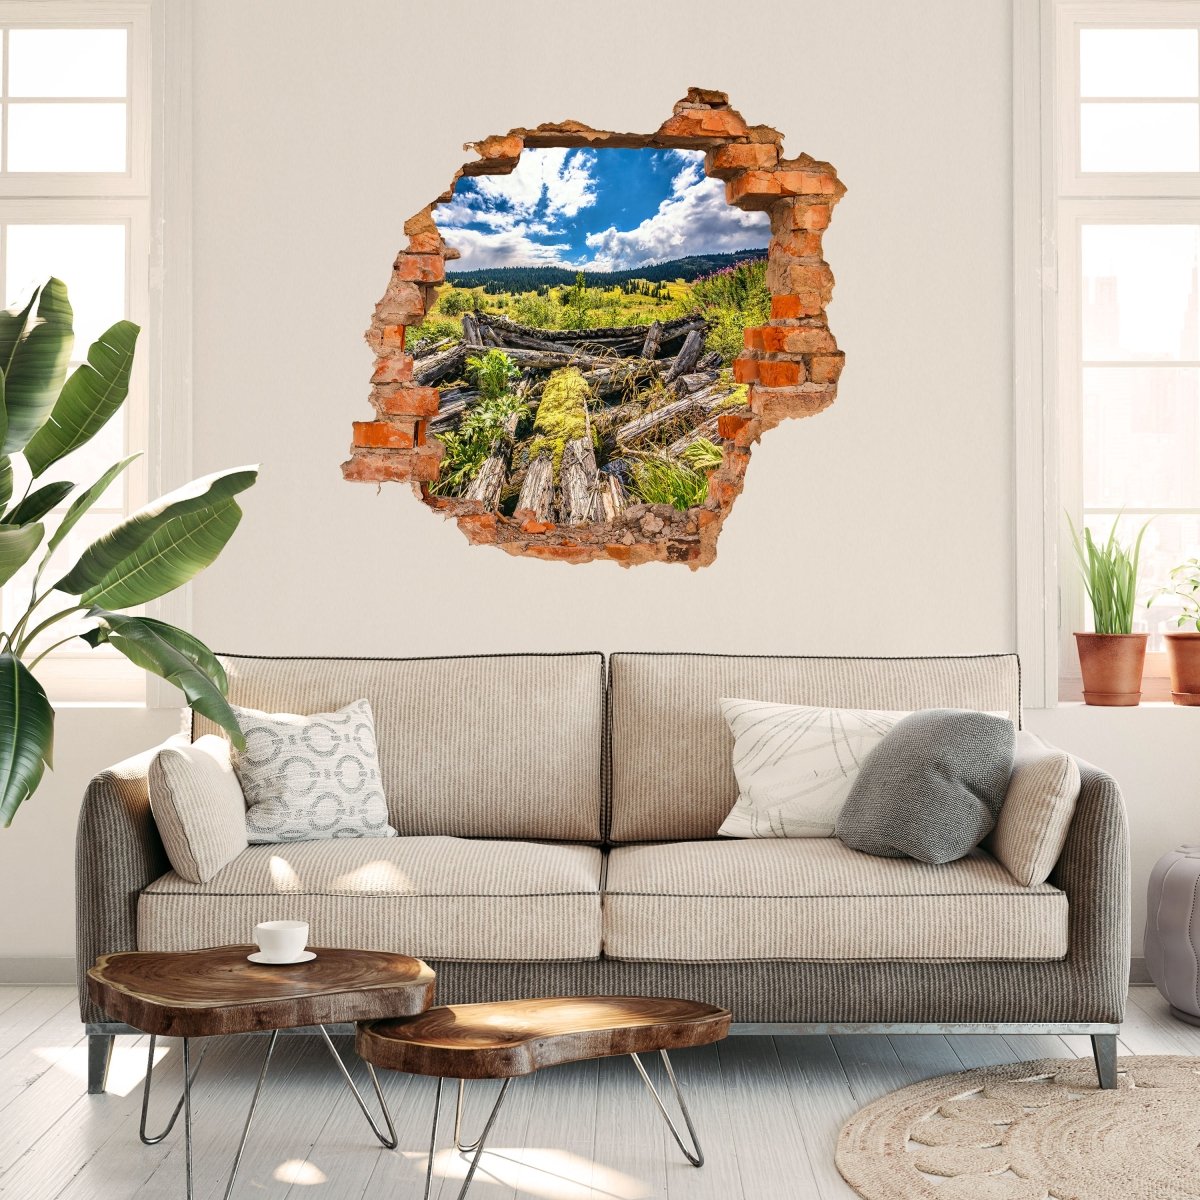 Sticker mural 3D vieux bois sur prairie, ciel, forêt - Sticker mural M1227